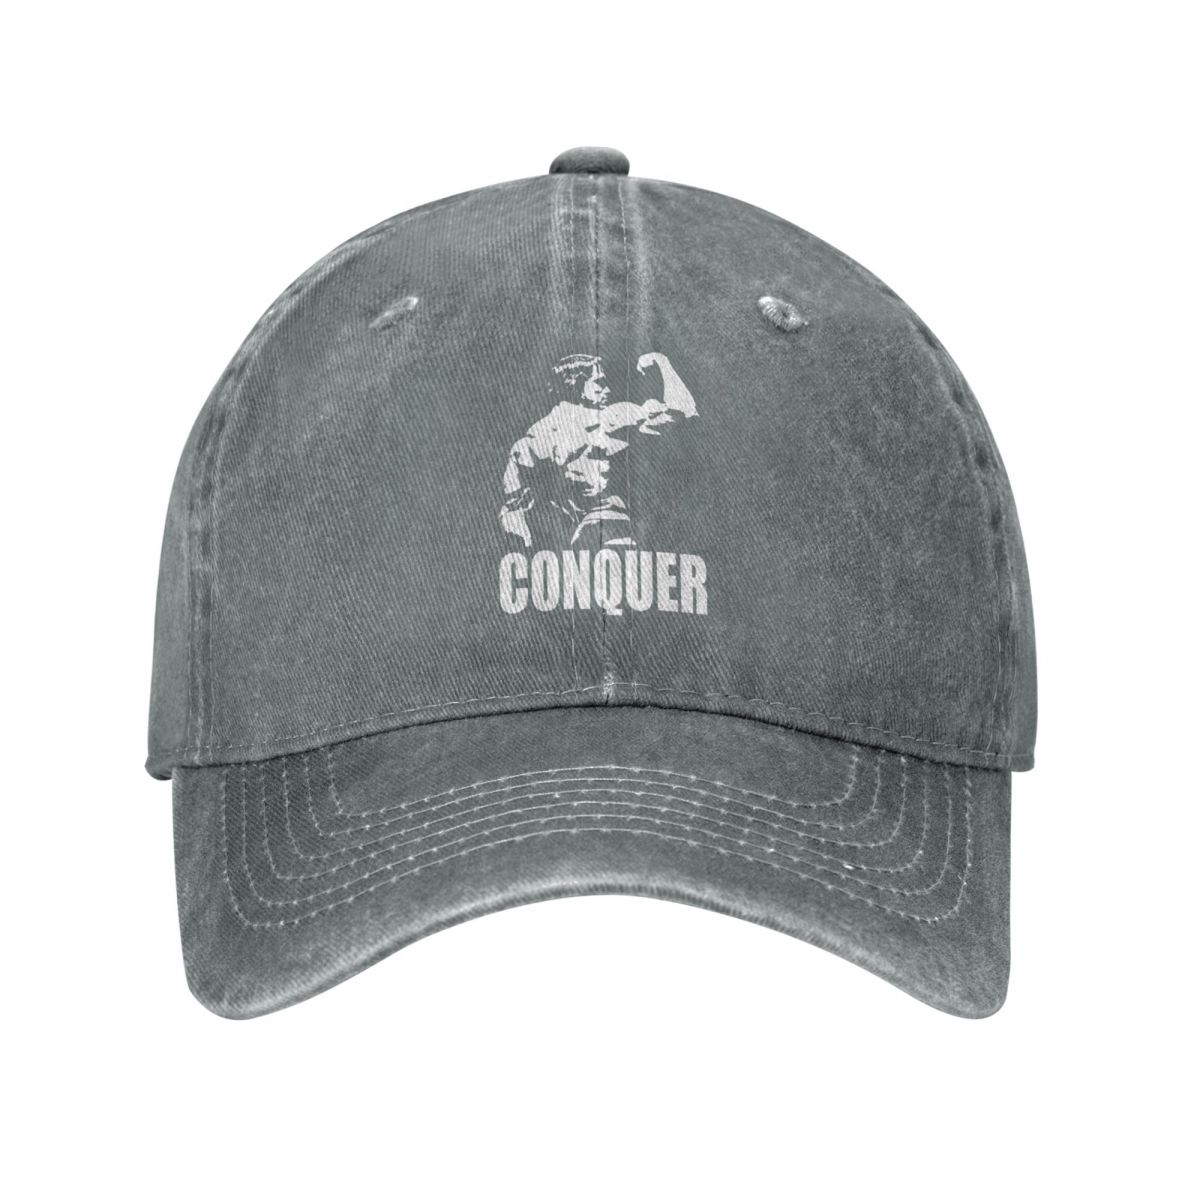 Conquer Arnold Schwarzenegger - Snapback Baseball Cap - Summer Hat For Men and Women-Gray-One Size-